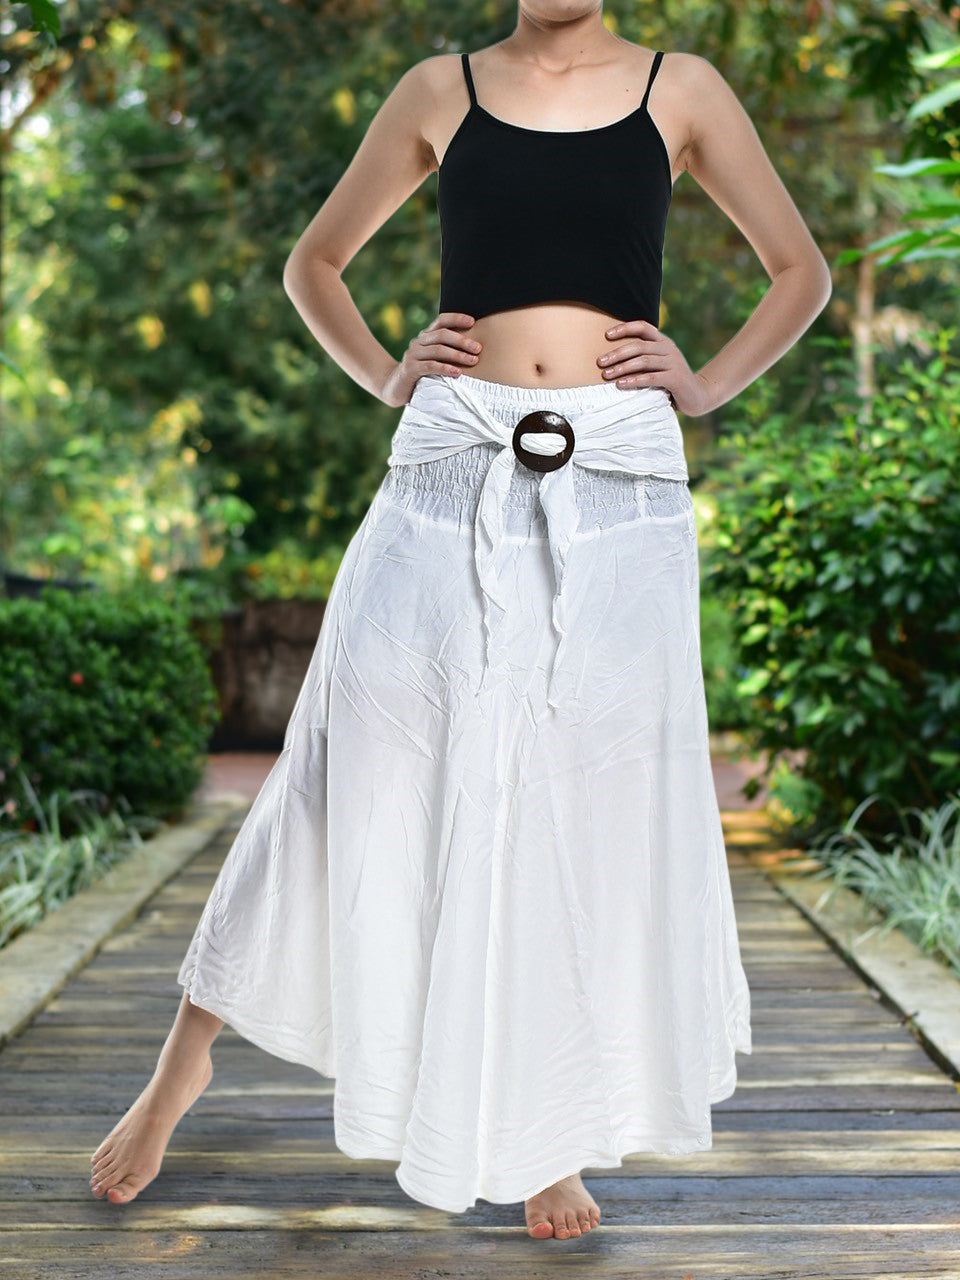 Bohotusk Plain White Beach Dress (& Long Skirt With Coconut Buckle) S/M to 3XL